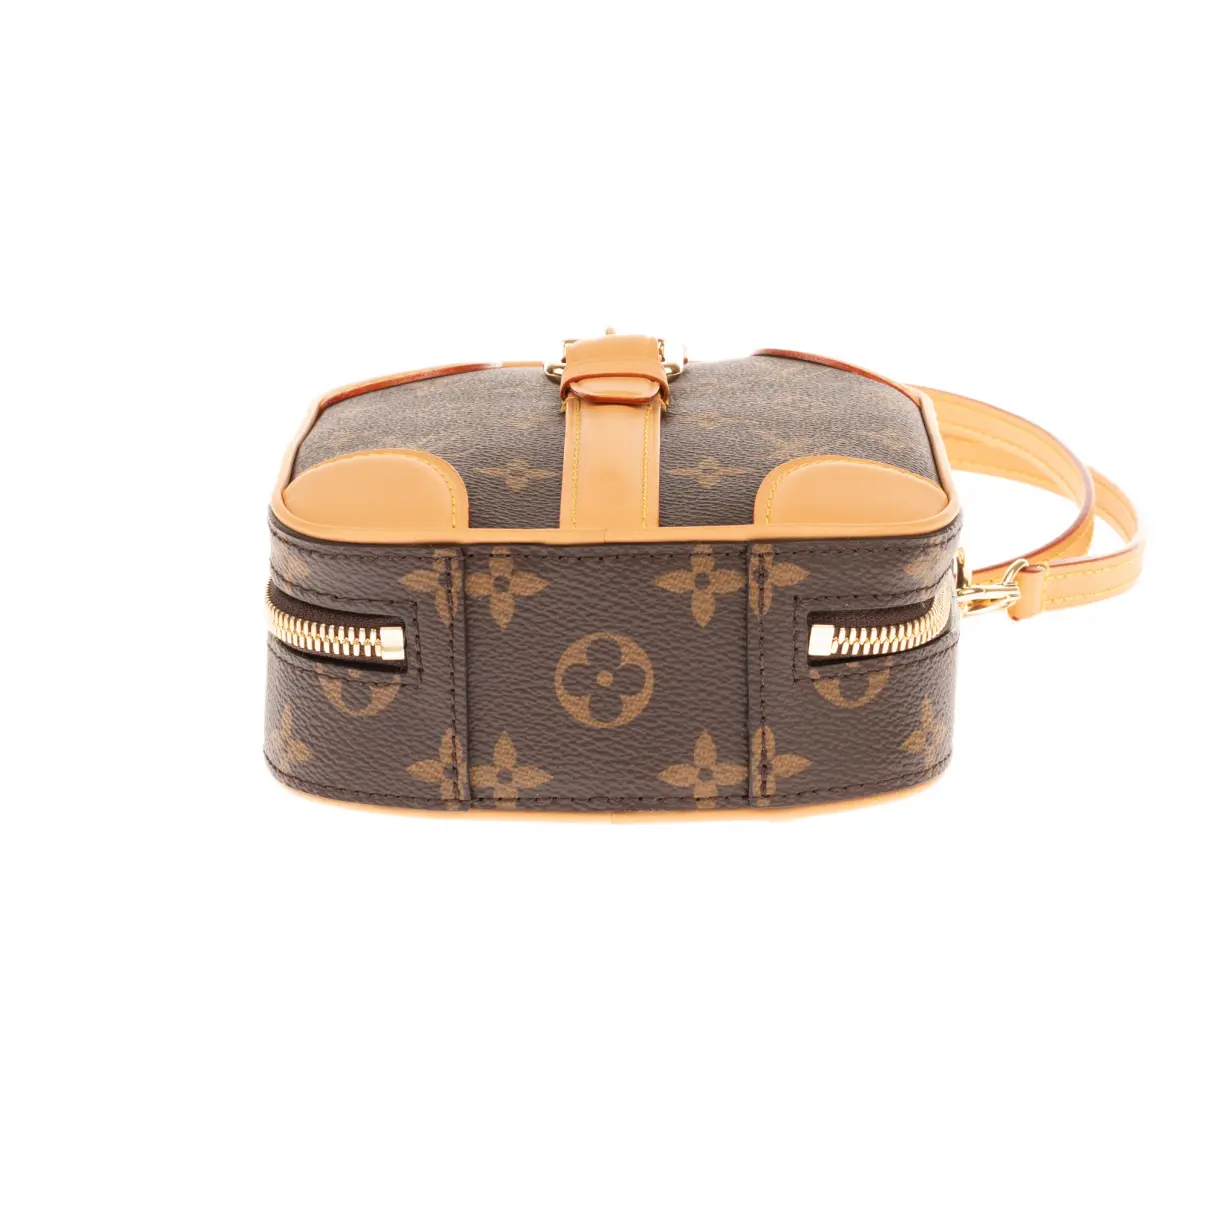 Buy Louis Vuitton Valisette cloth handbag online